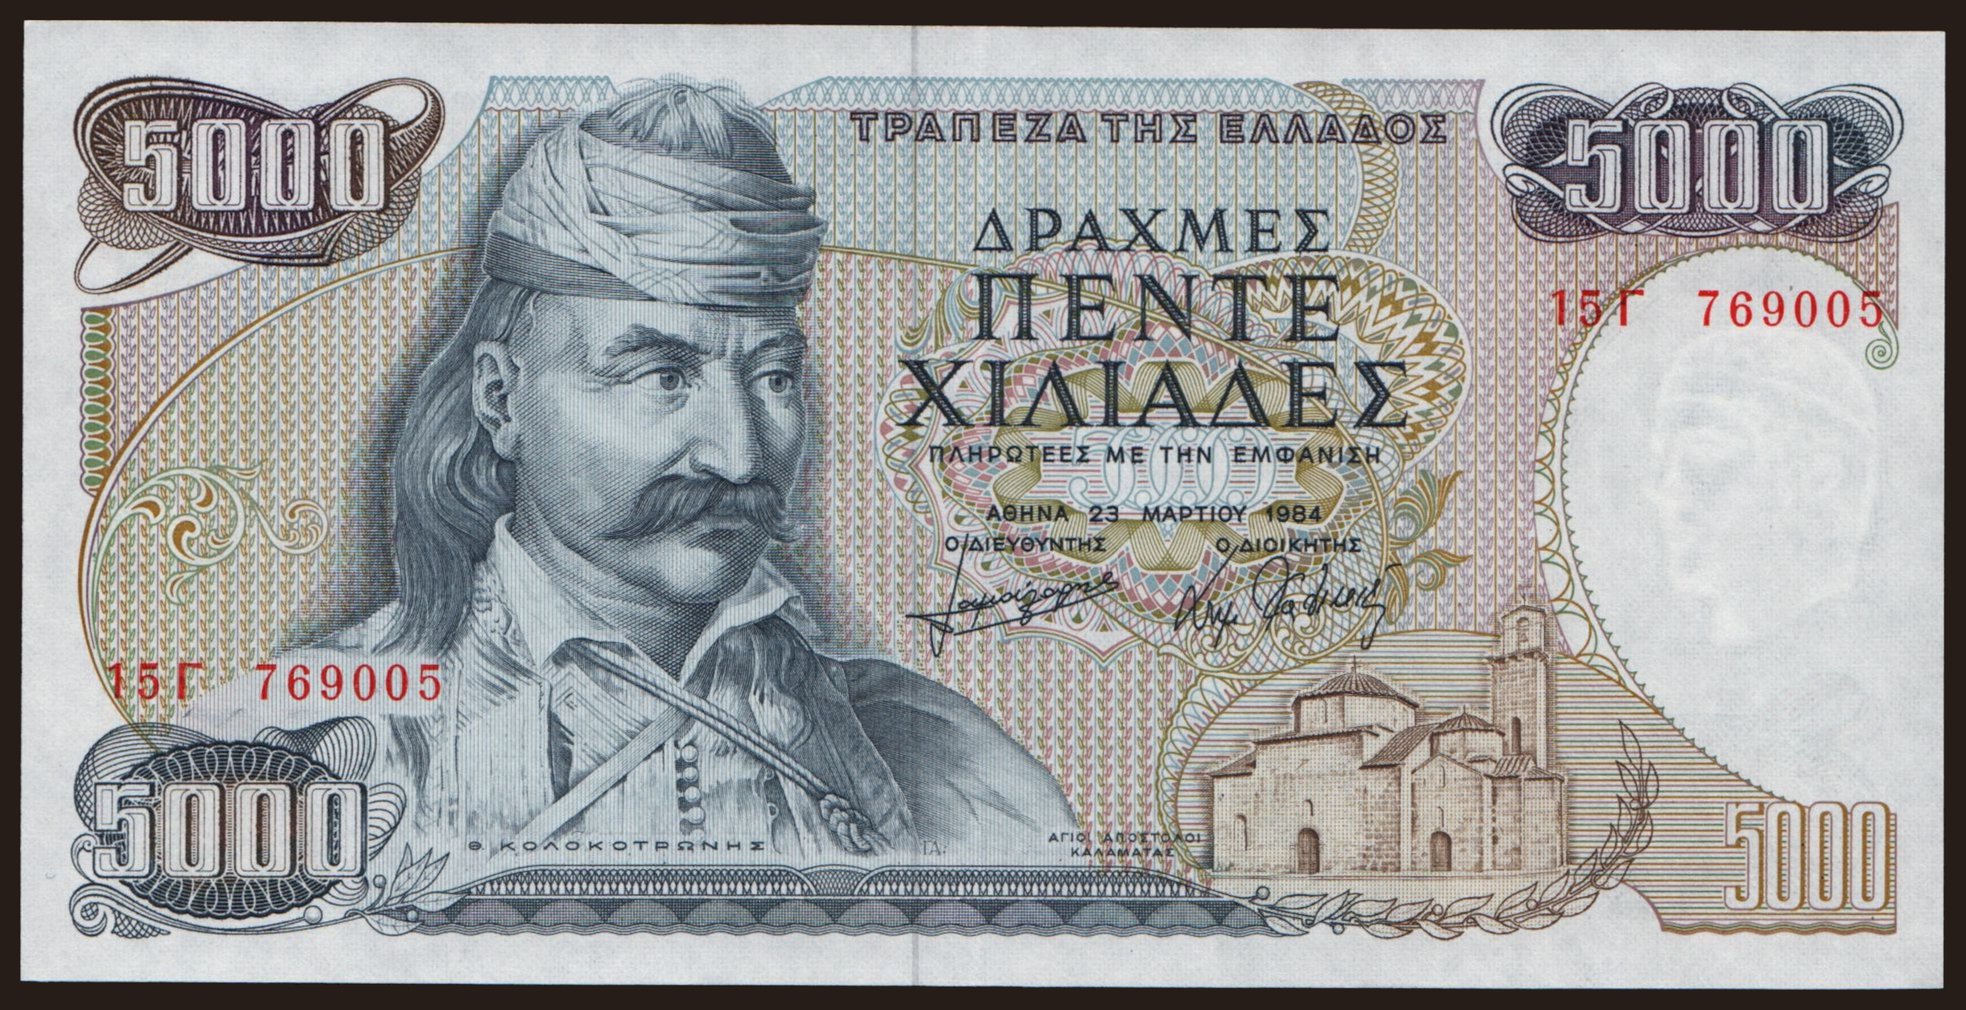 5000 drachmaes, 1984